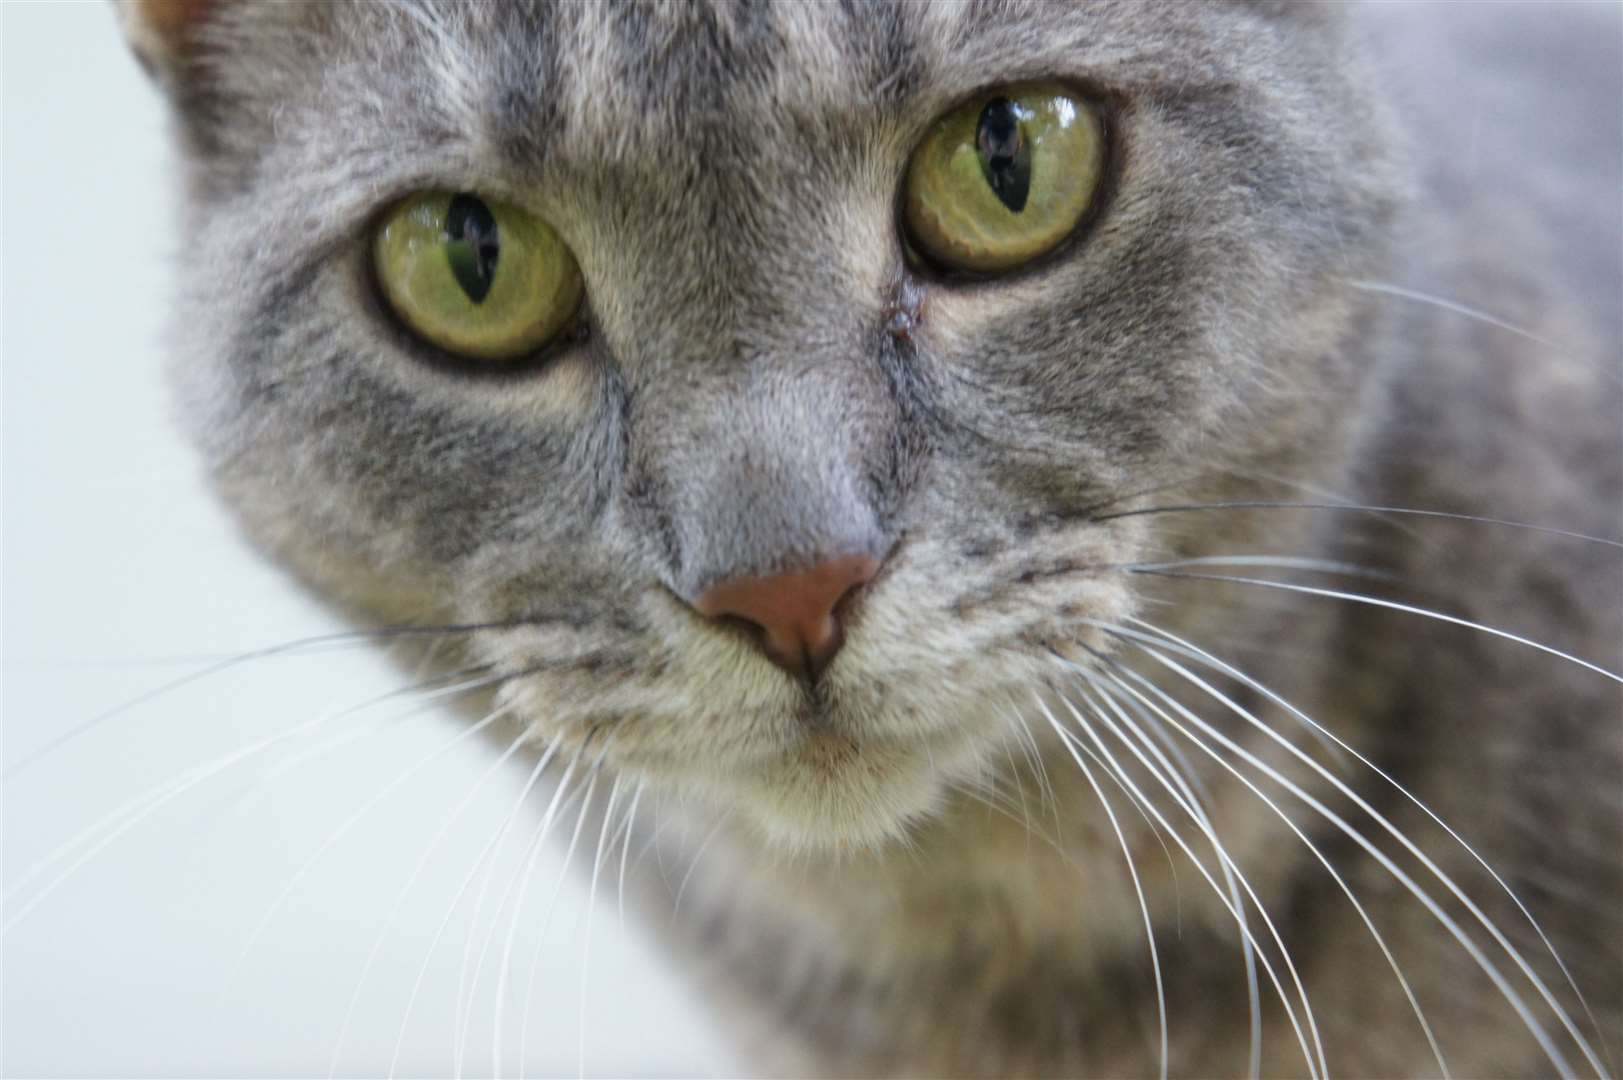 A grey tabby cat. Credit: Wikimedia SportsandHistoryReader521